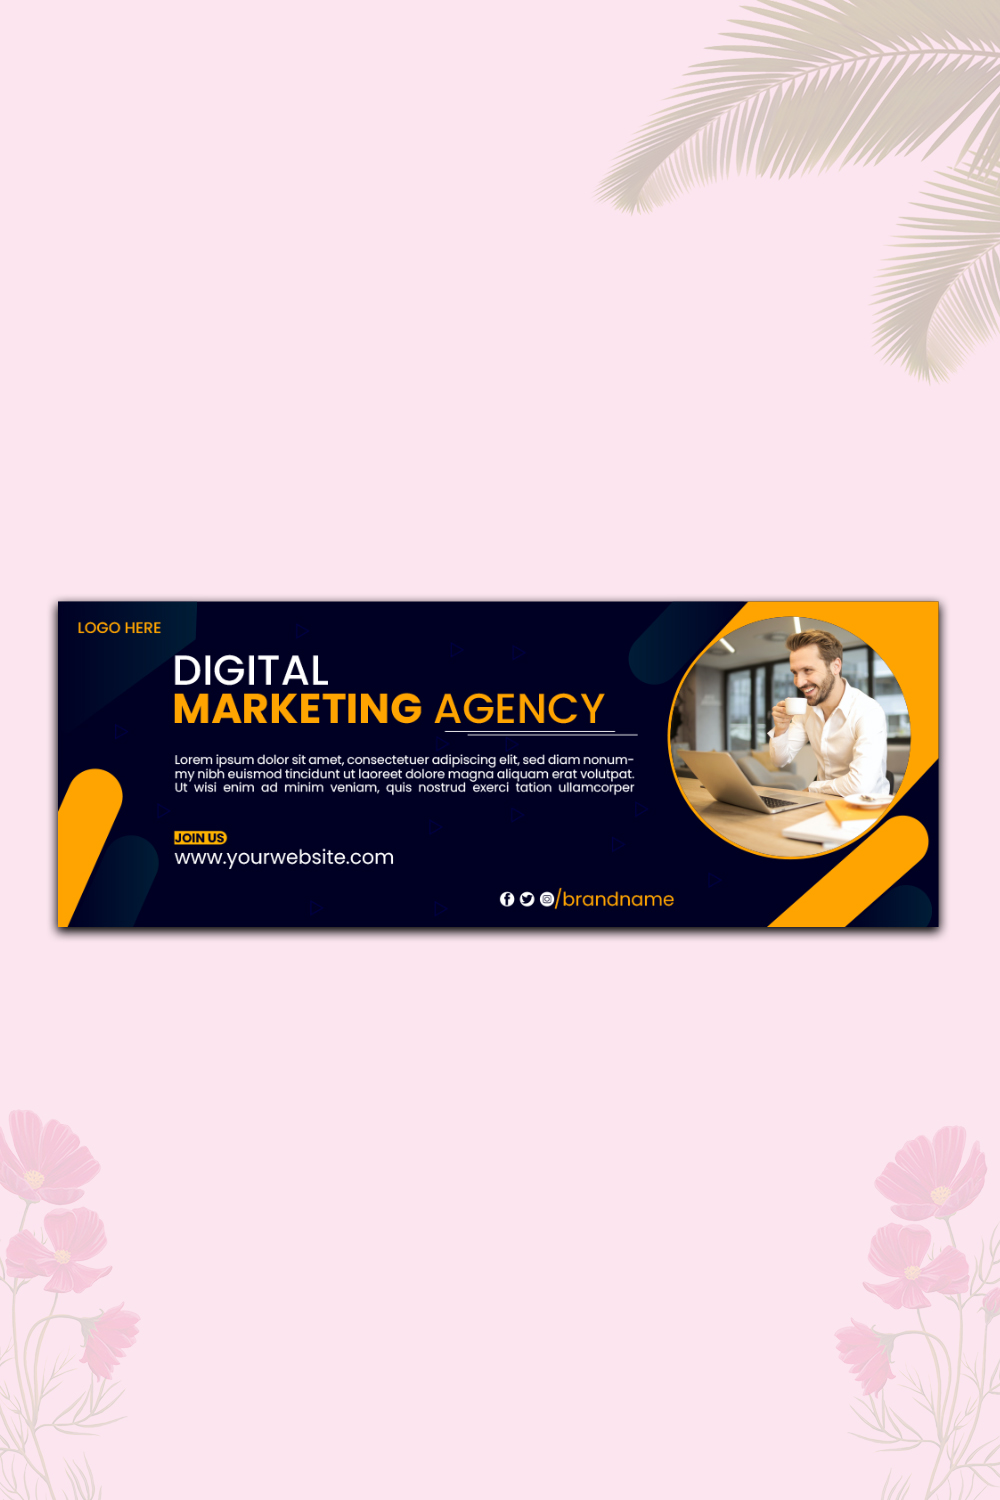 Digital Marketing Agency Facebook Cover Design Template - Pinterest.